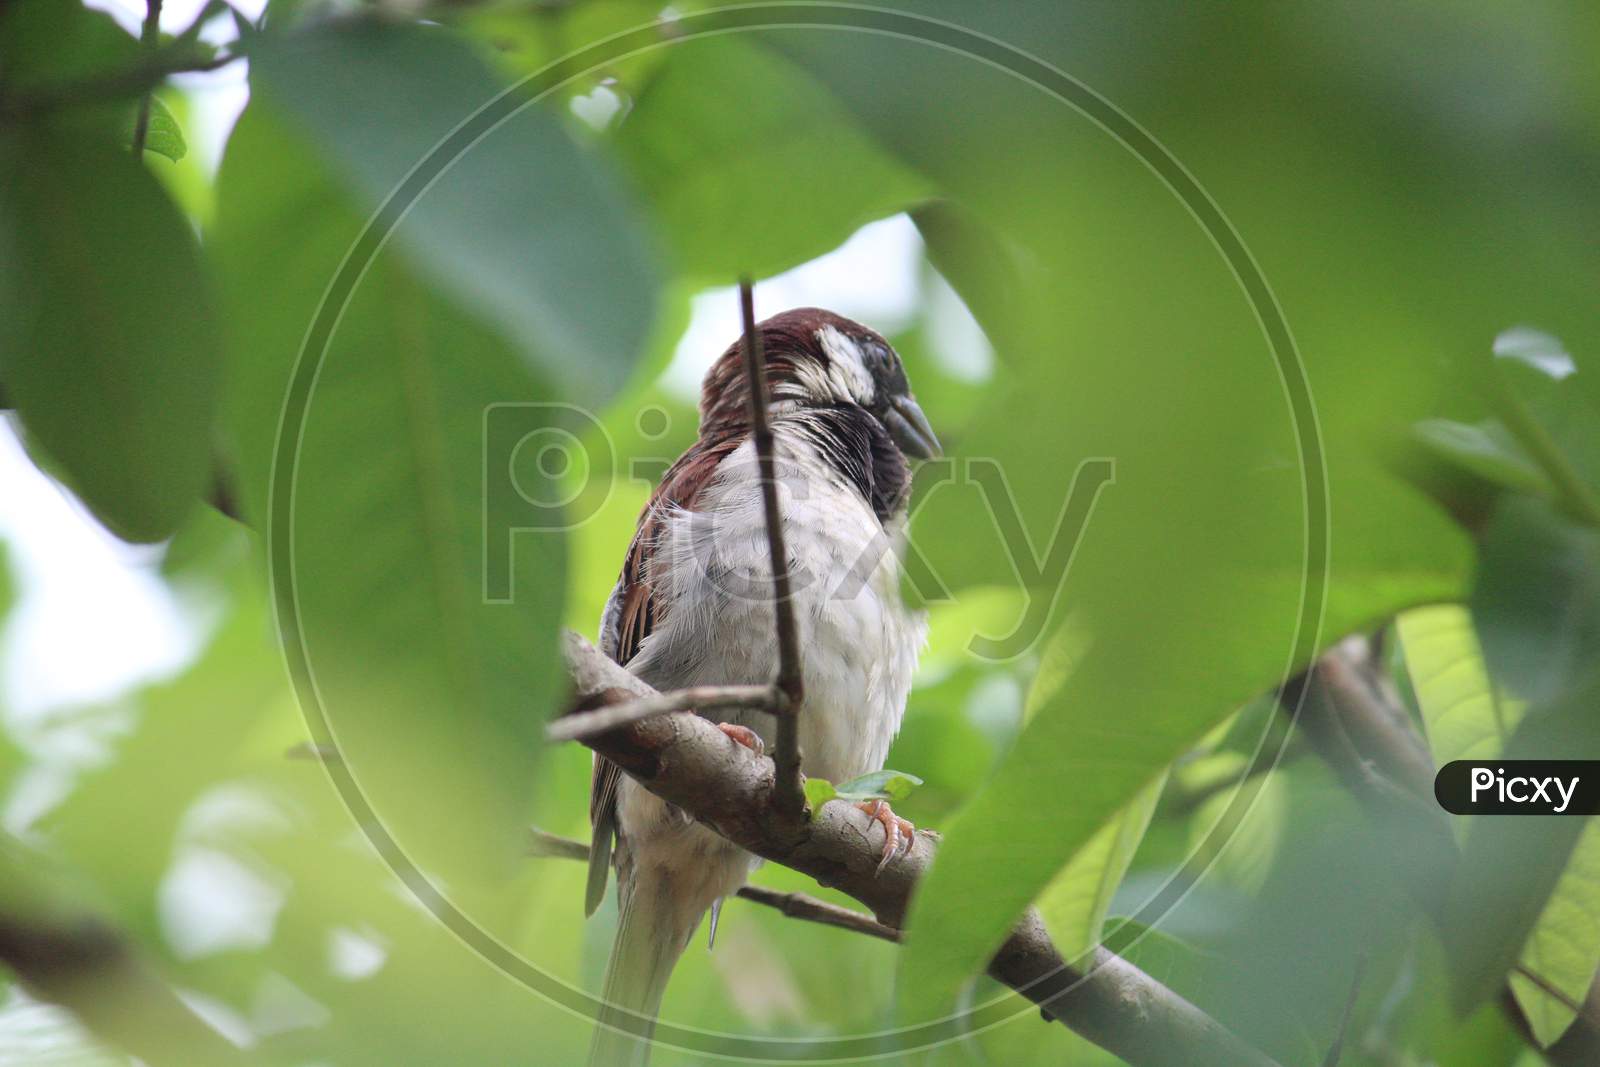 Male Sparrow sitting on tree